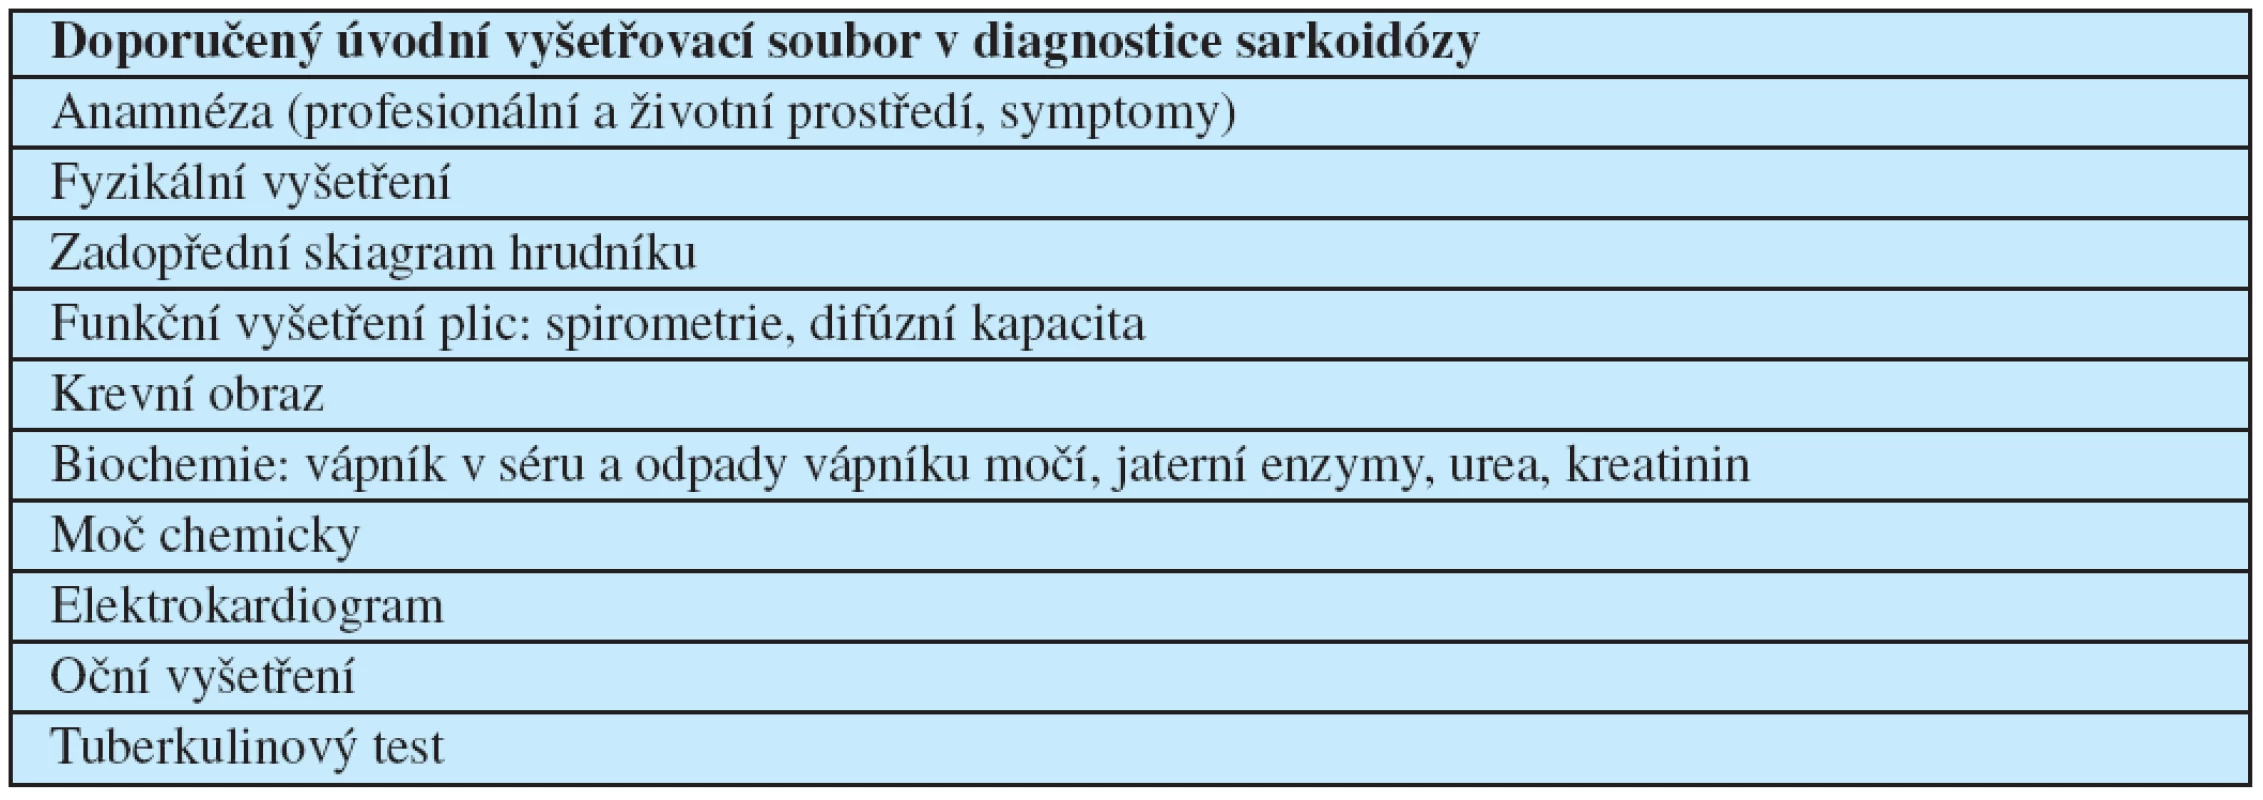 Doporučený diagnostický soubor u sarkoidózy